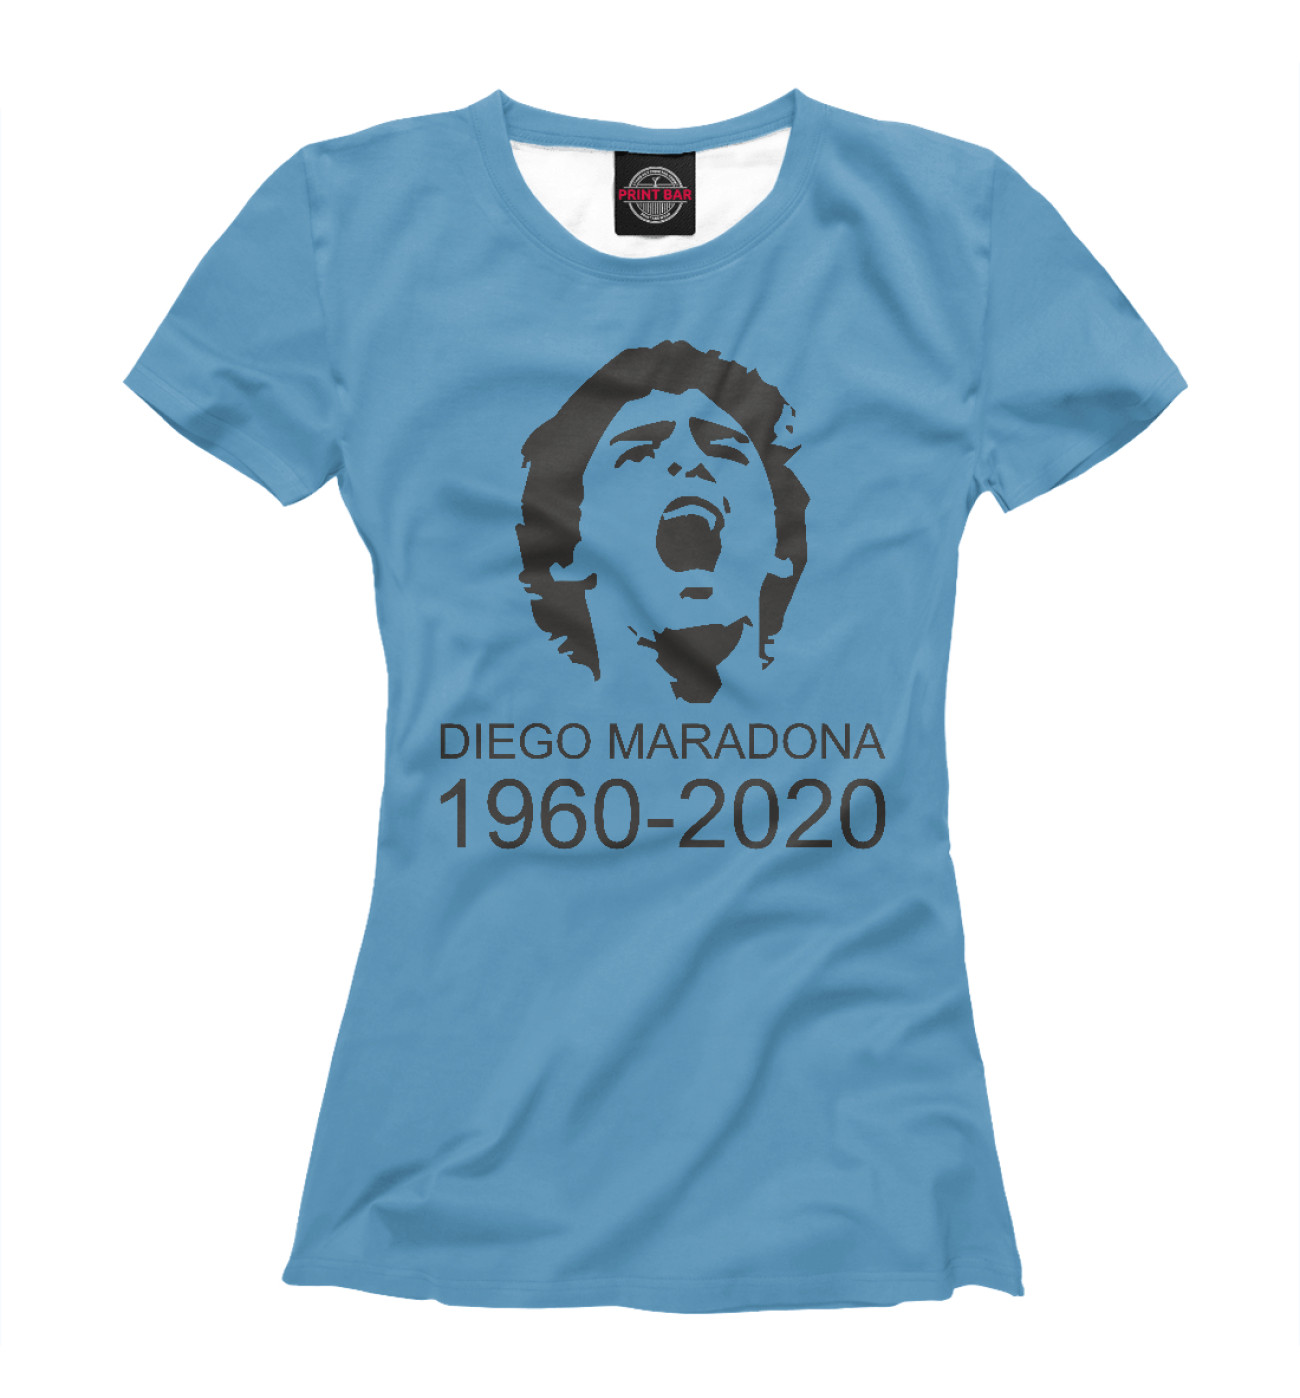 Женская Футболка Диего Марадона, артикул: FLT-355097-fut-1